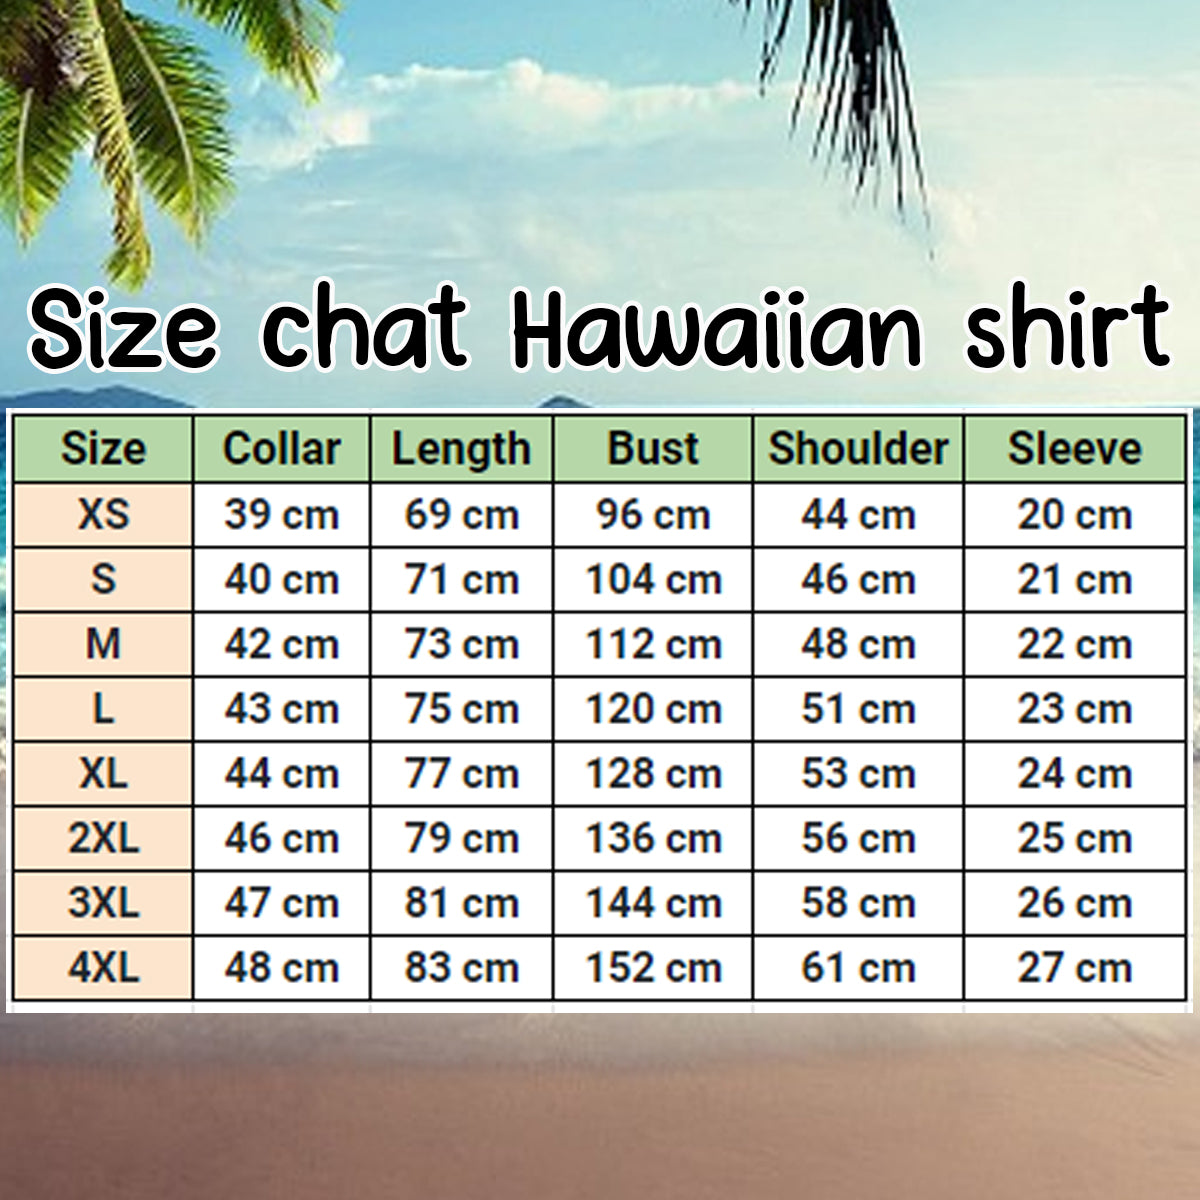 Stunning Tropical Jungle Hedgehog Lovers Hawaiian Shirt